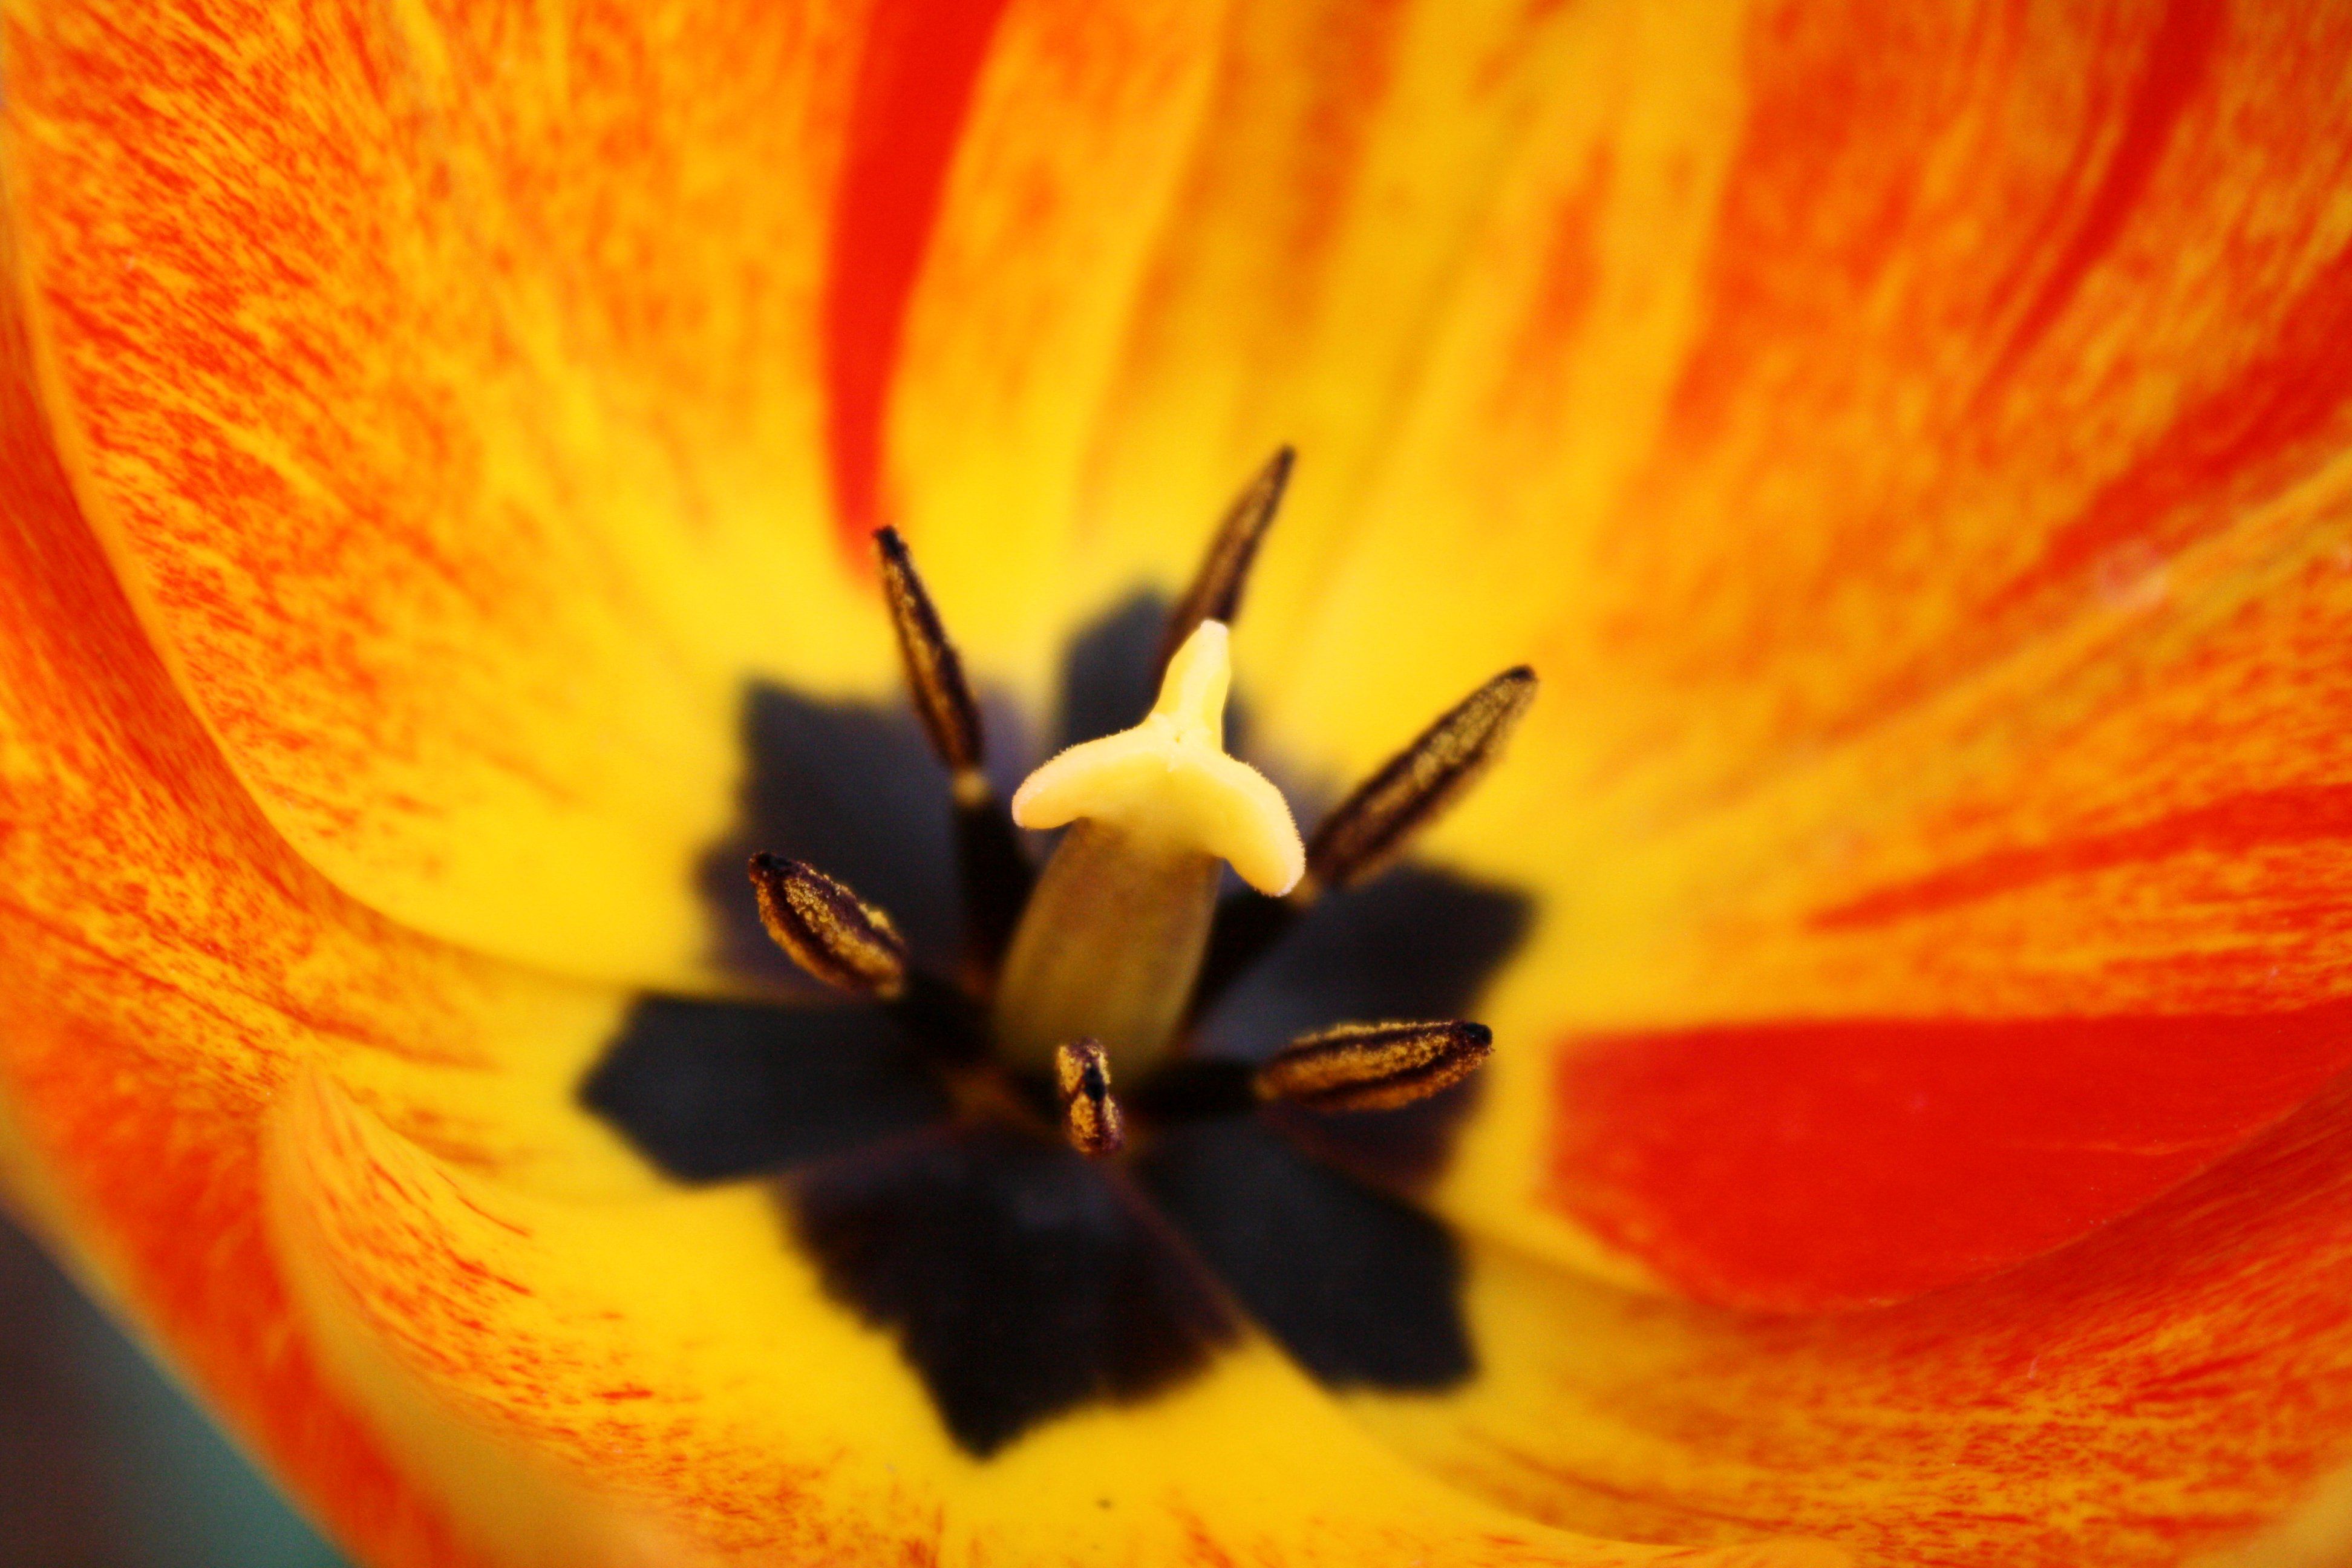 Macro tulip photo